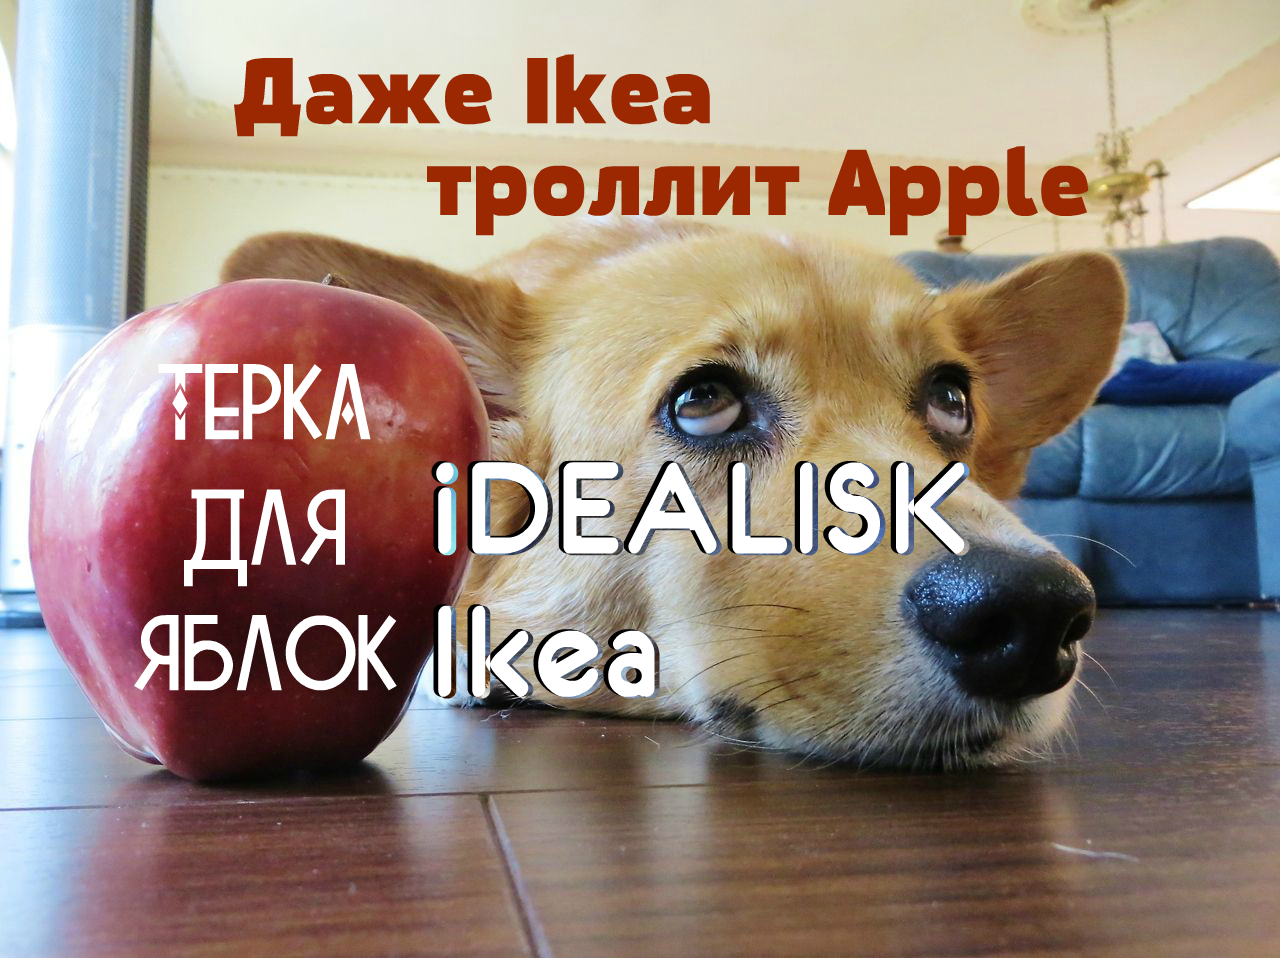 Терка iDEALISK Ikea. Даже Ikea троллит новый Apple Mac apple,компьютеры